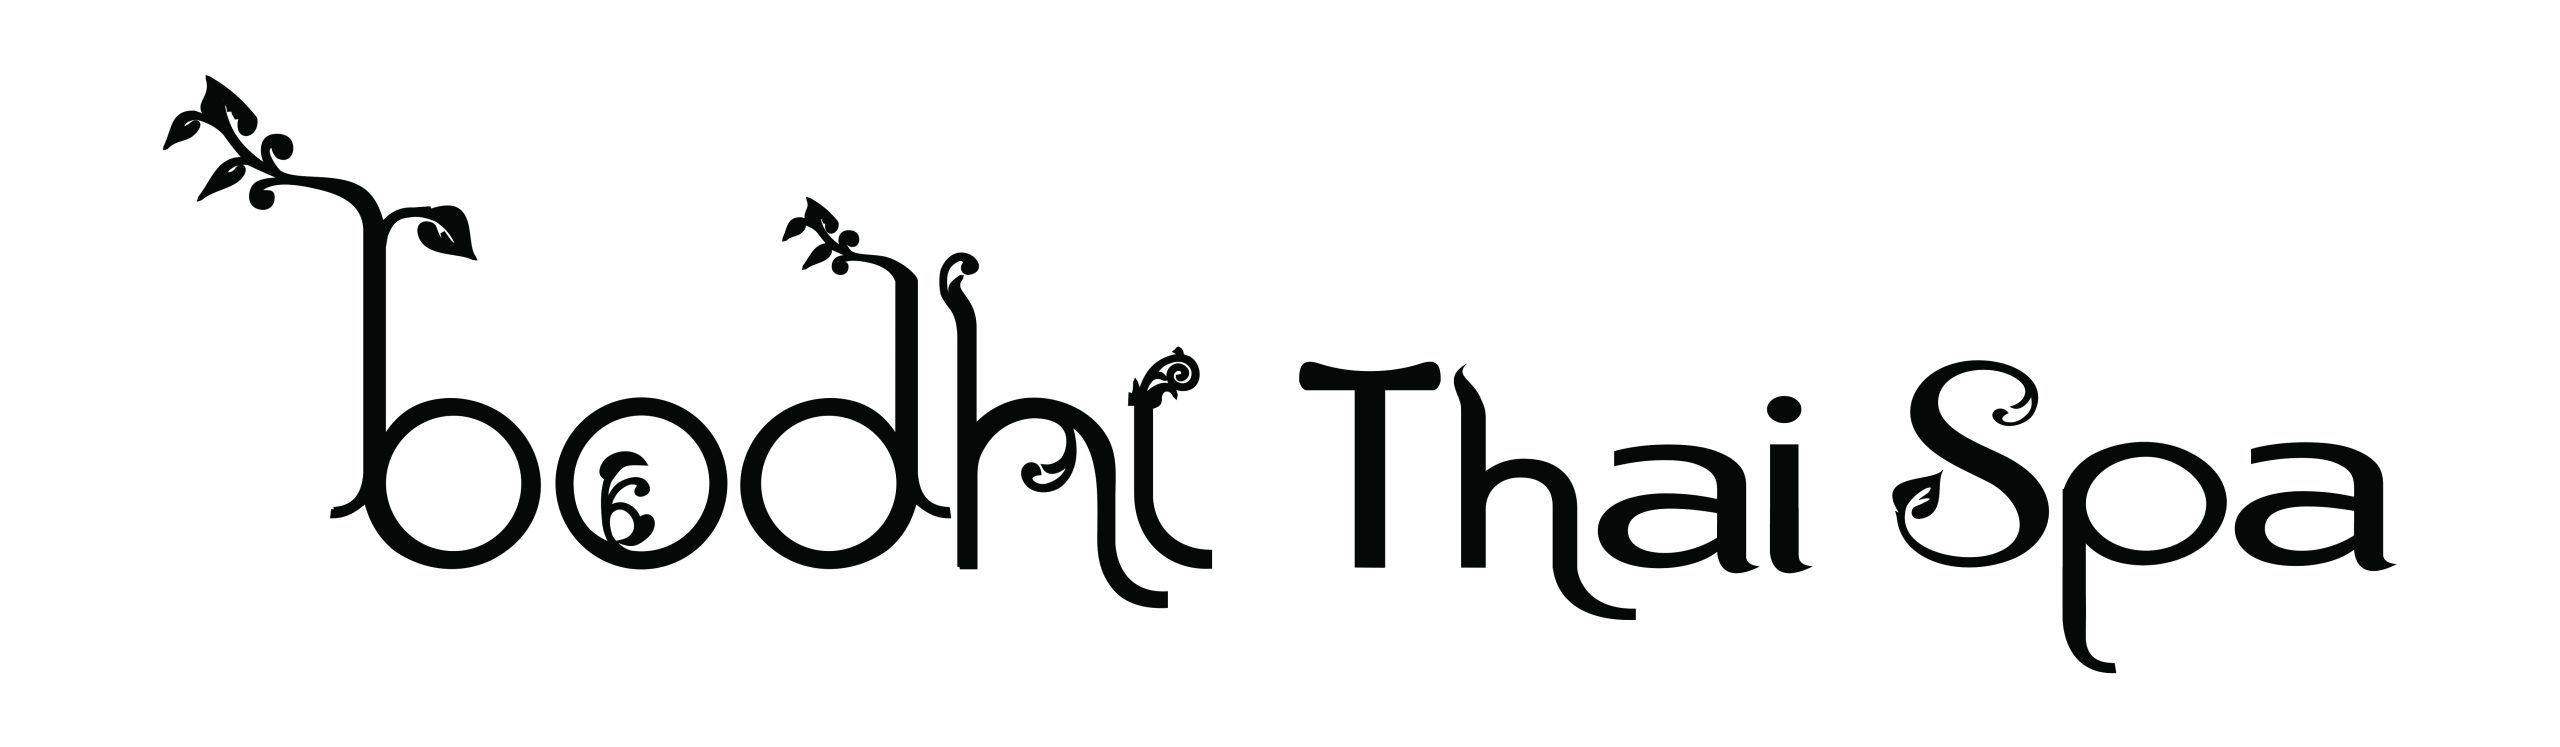 BODHI THAI SPA logo